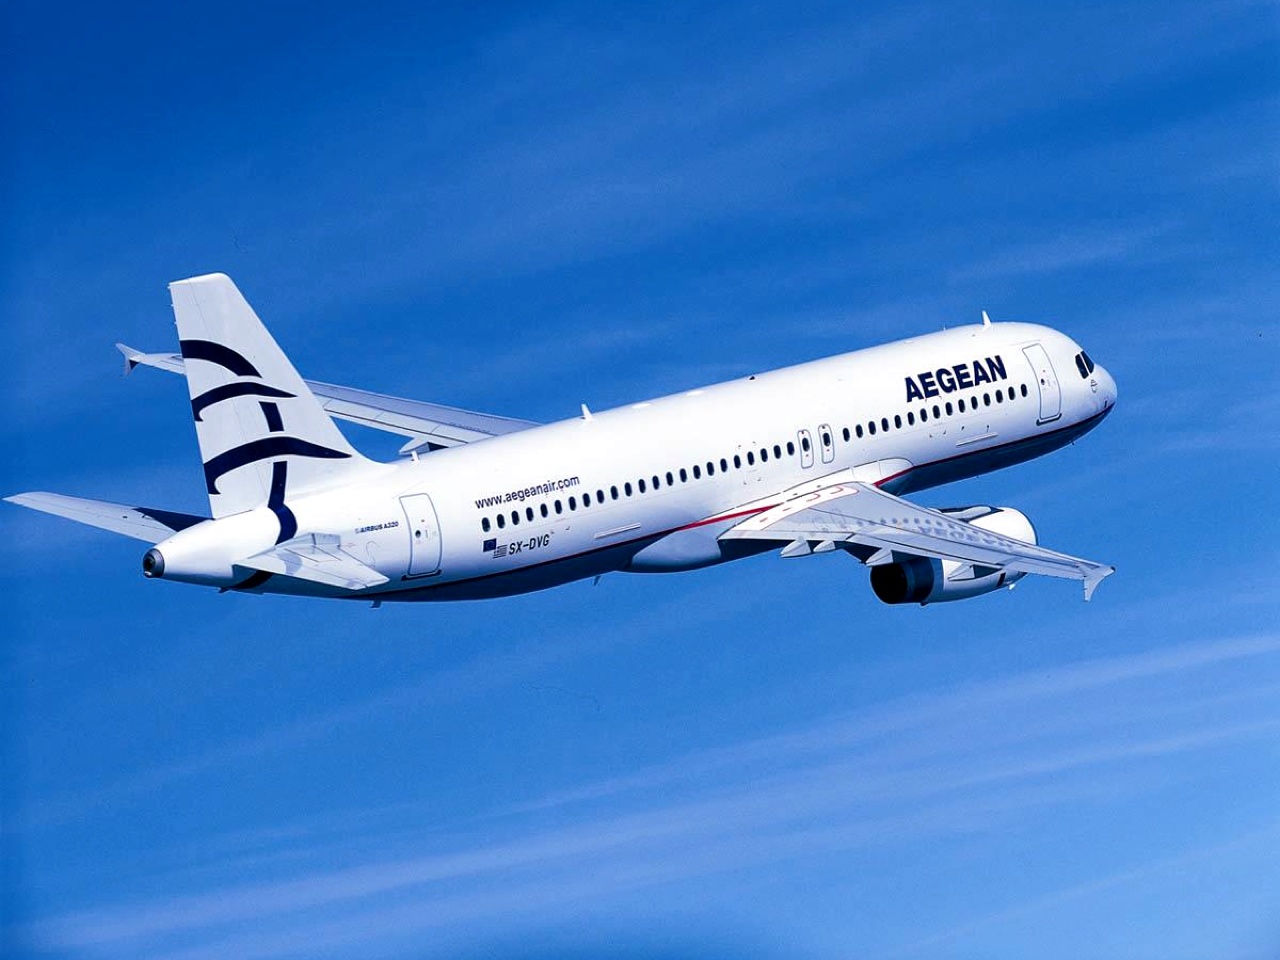 AEGEAN Tops TripAdvisor List as Europe’s Best Regional Airline for 2018